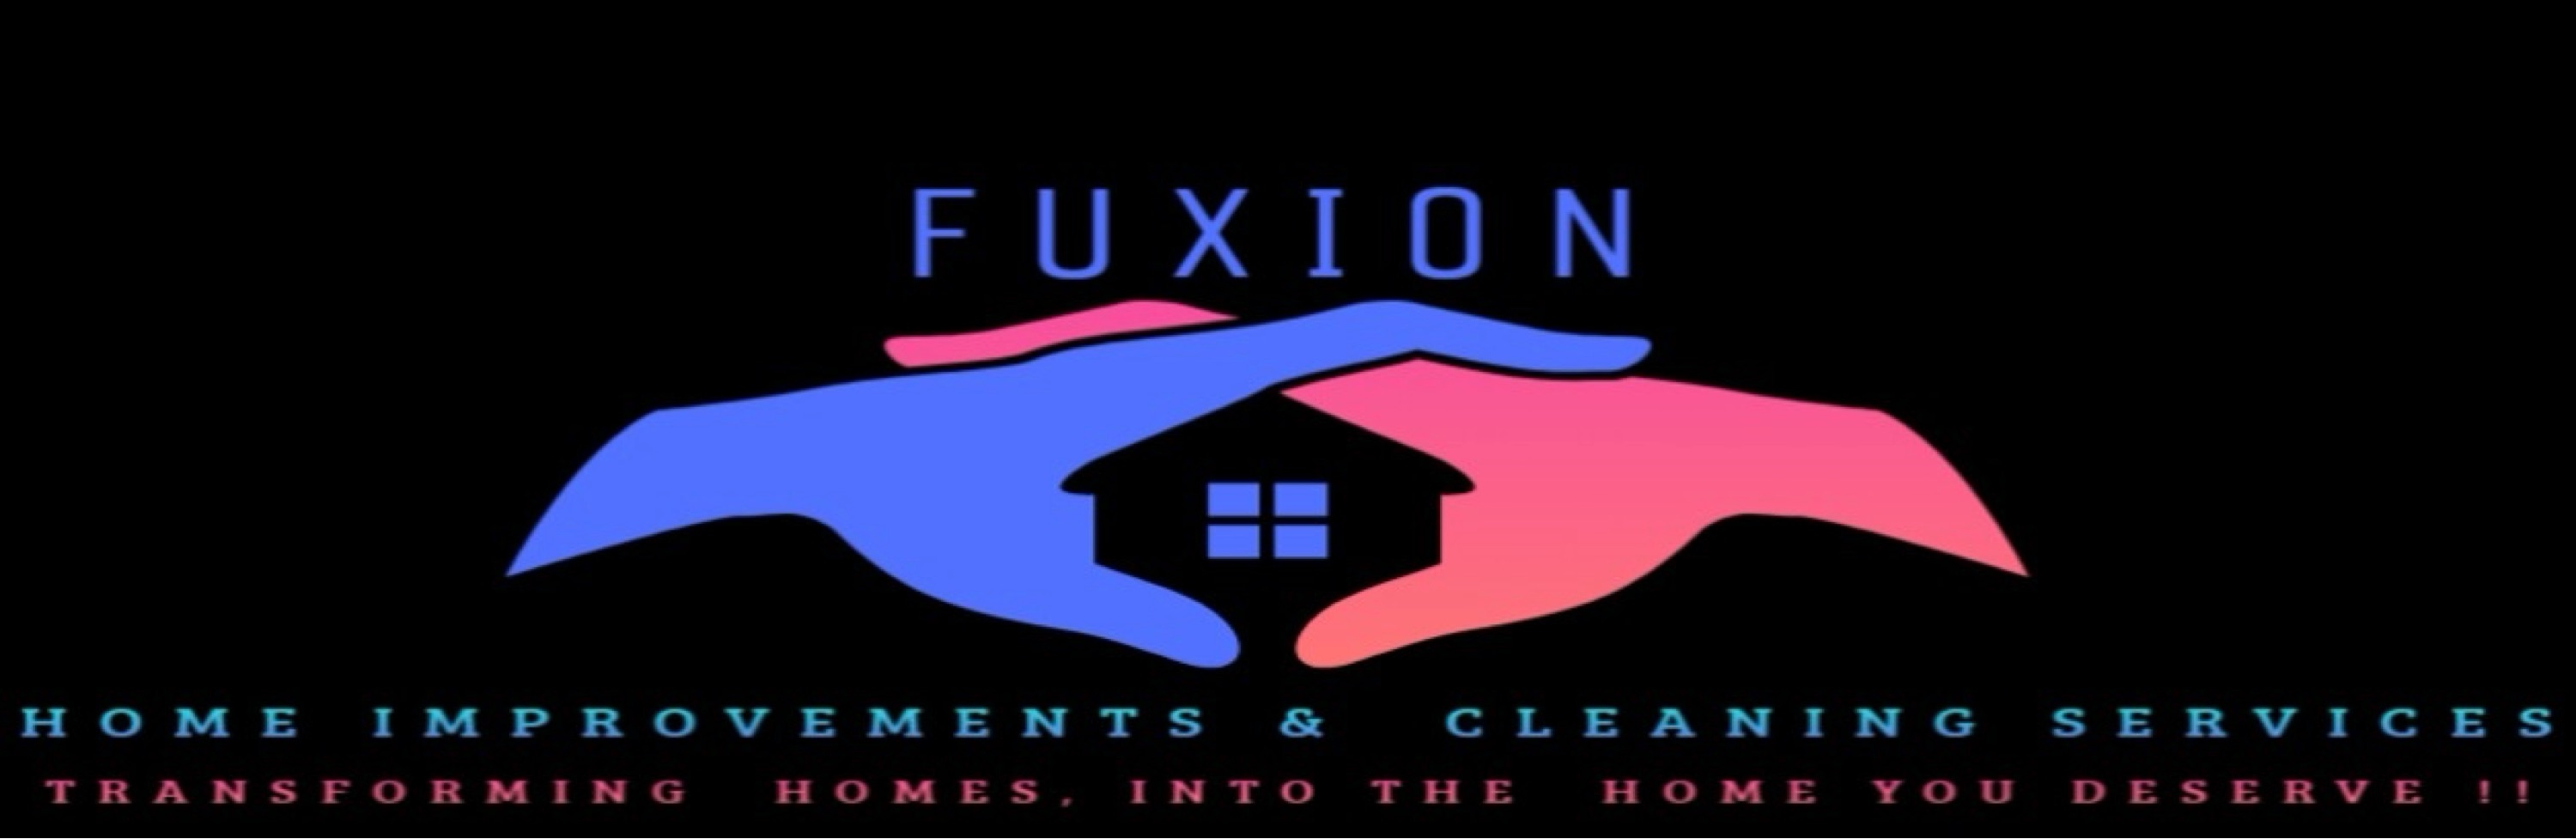 Fuxion Home Improvement Logo